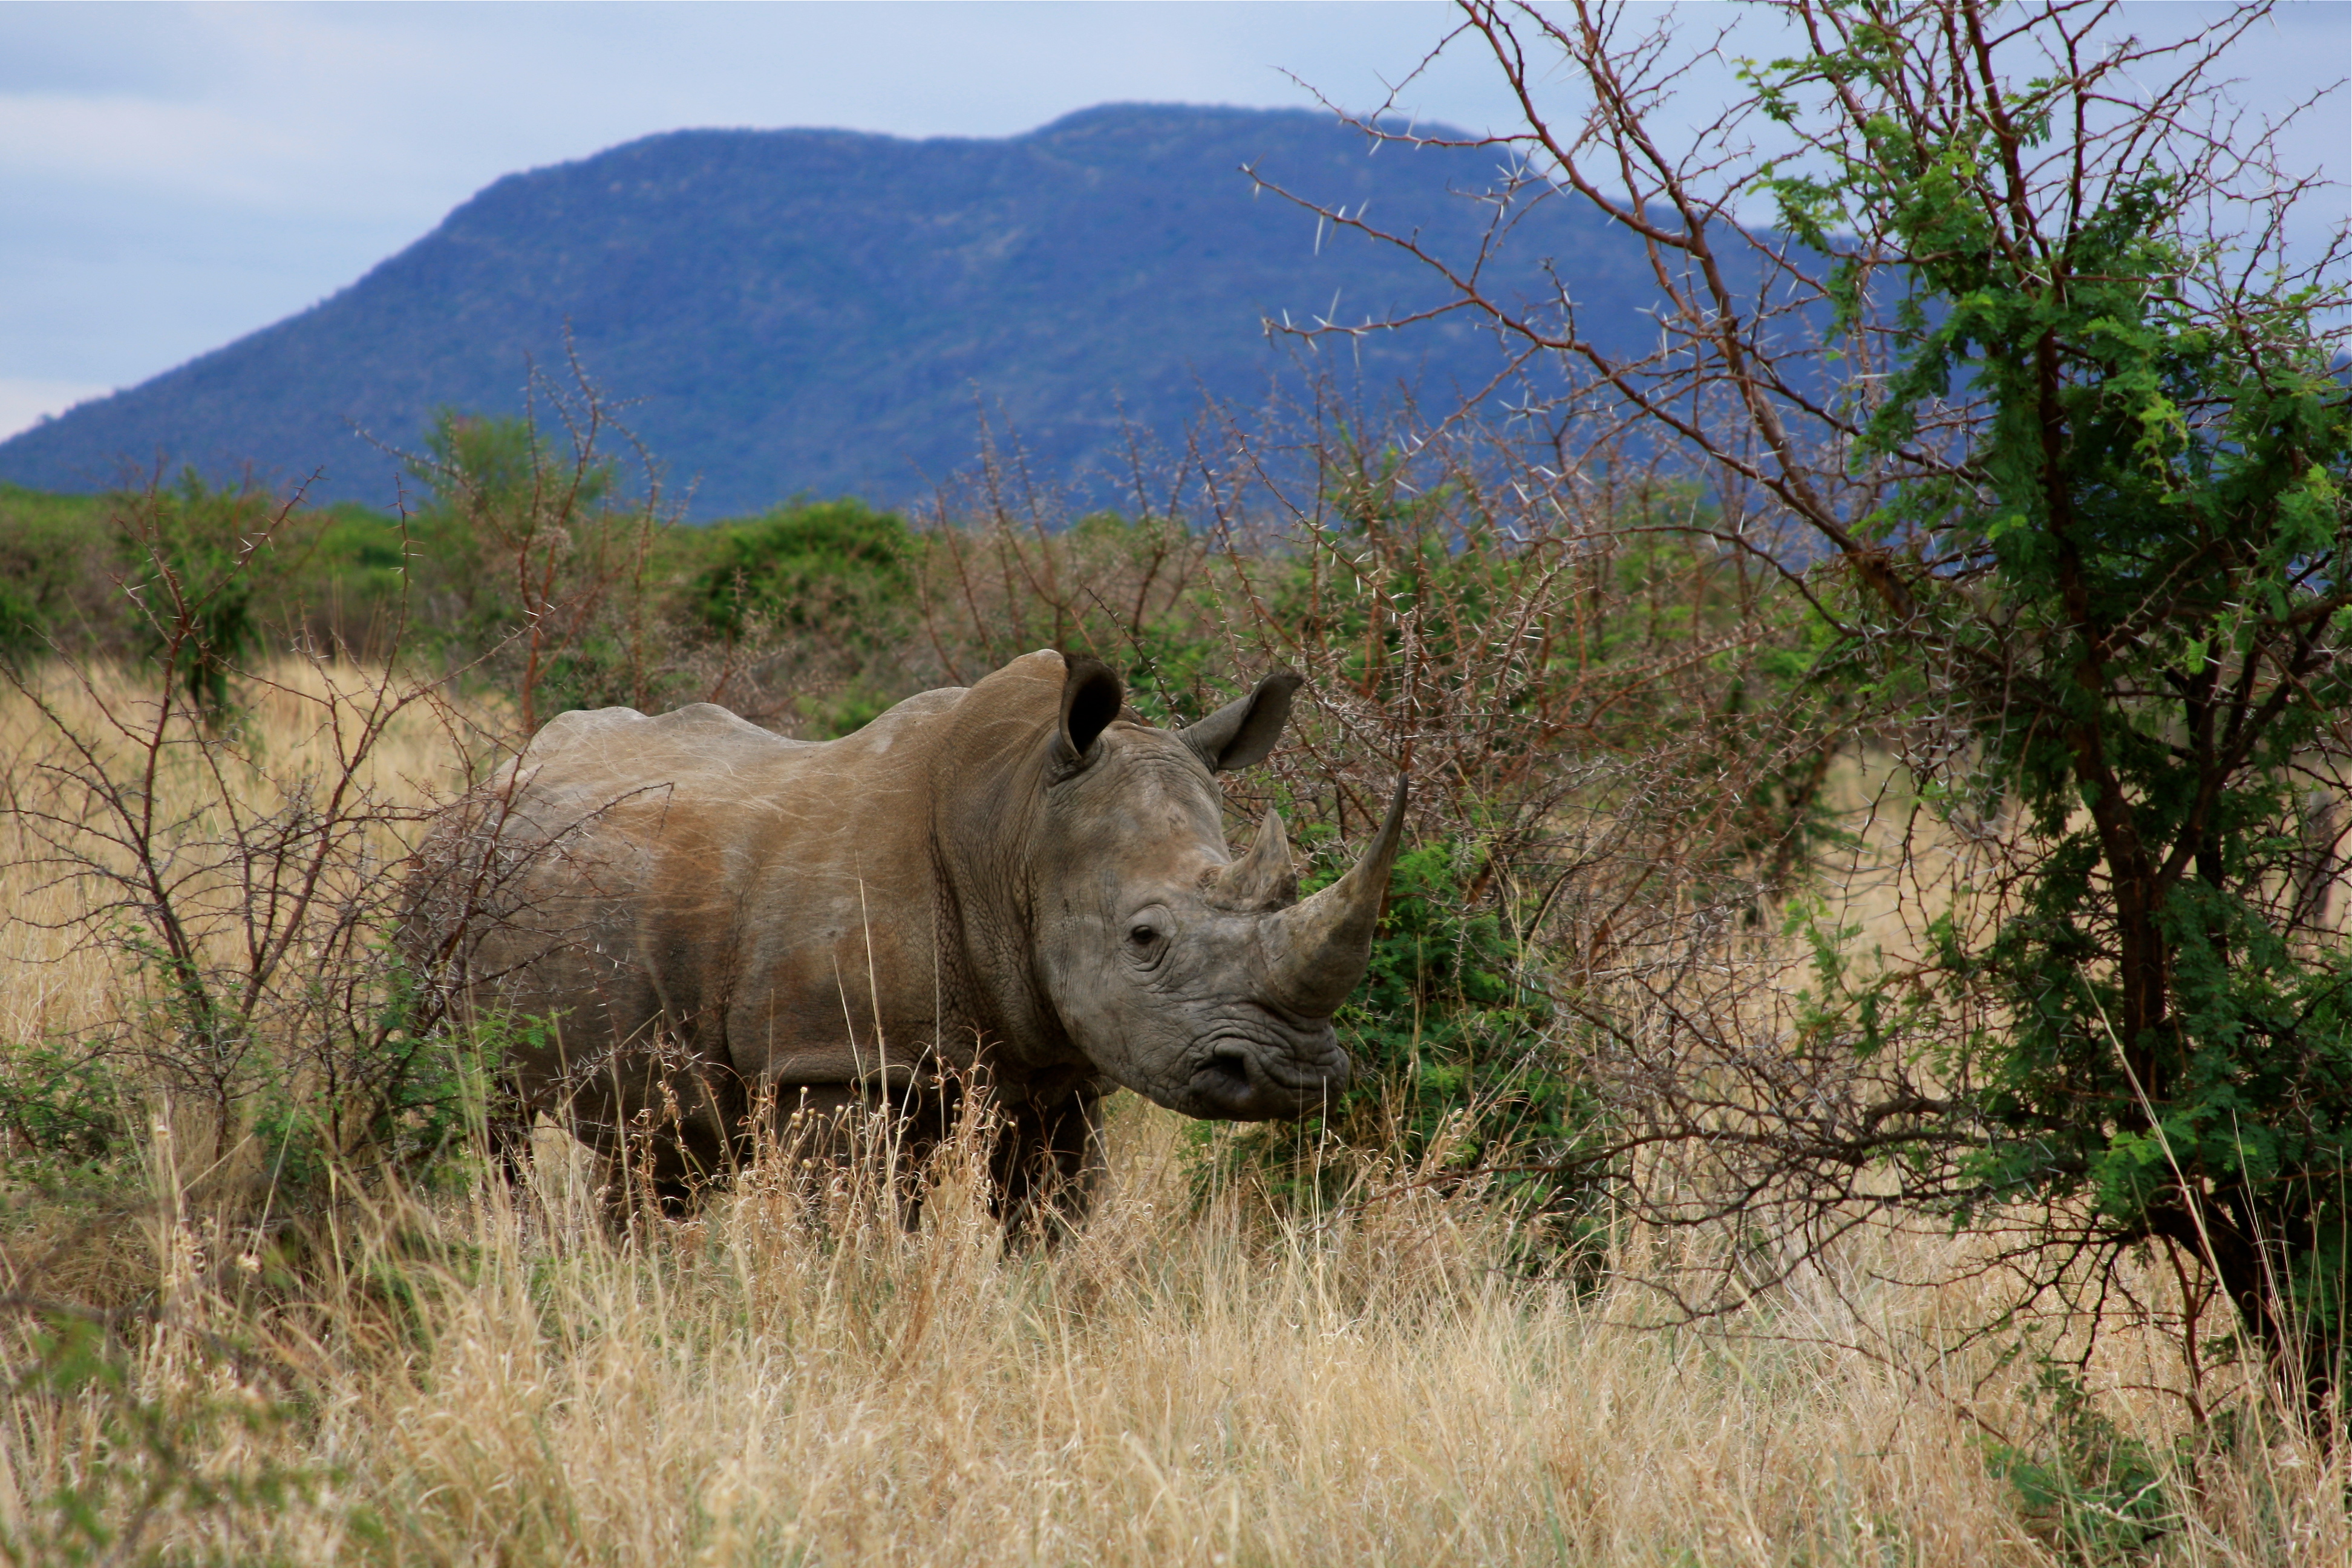 Ban Elephant Ivory, Legalize Rhino Horn? - Scientific American Blog ...